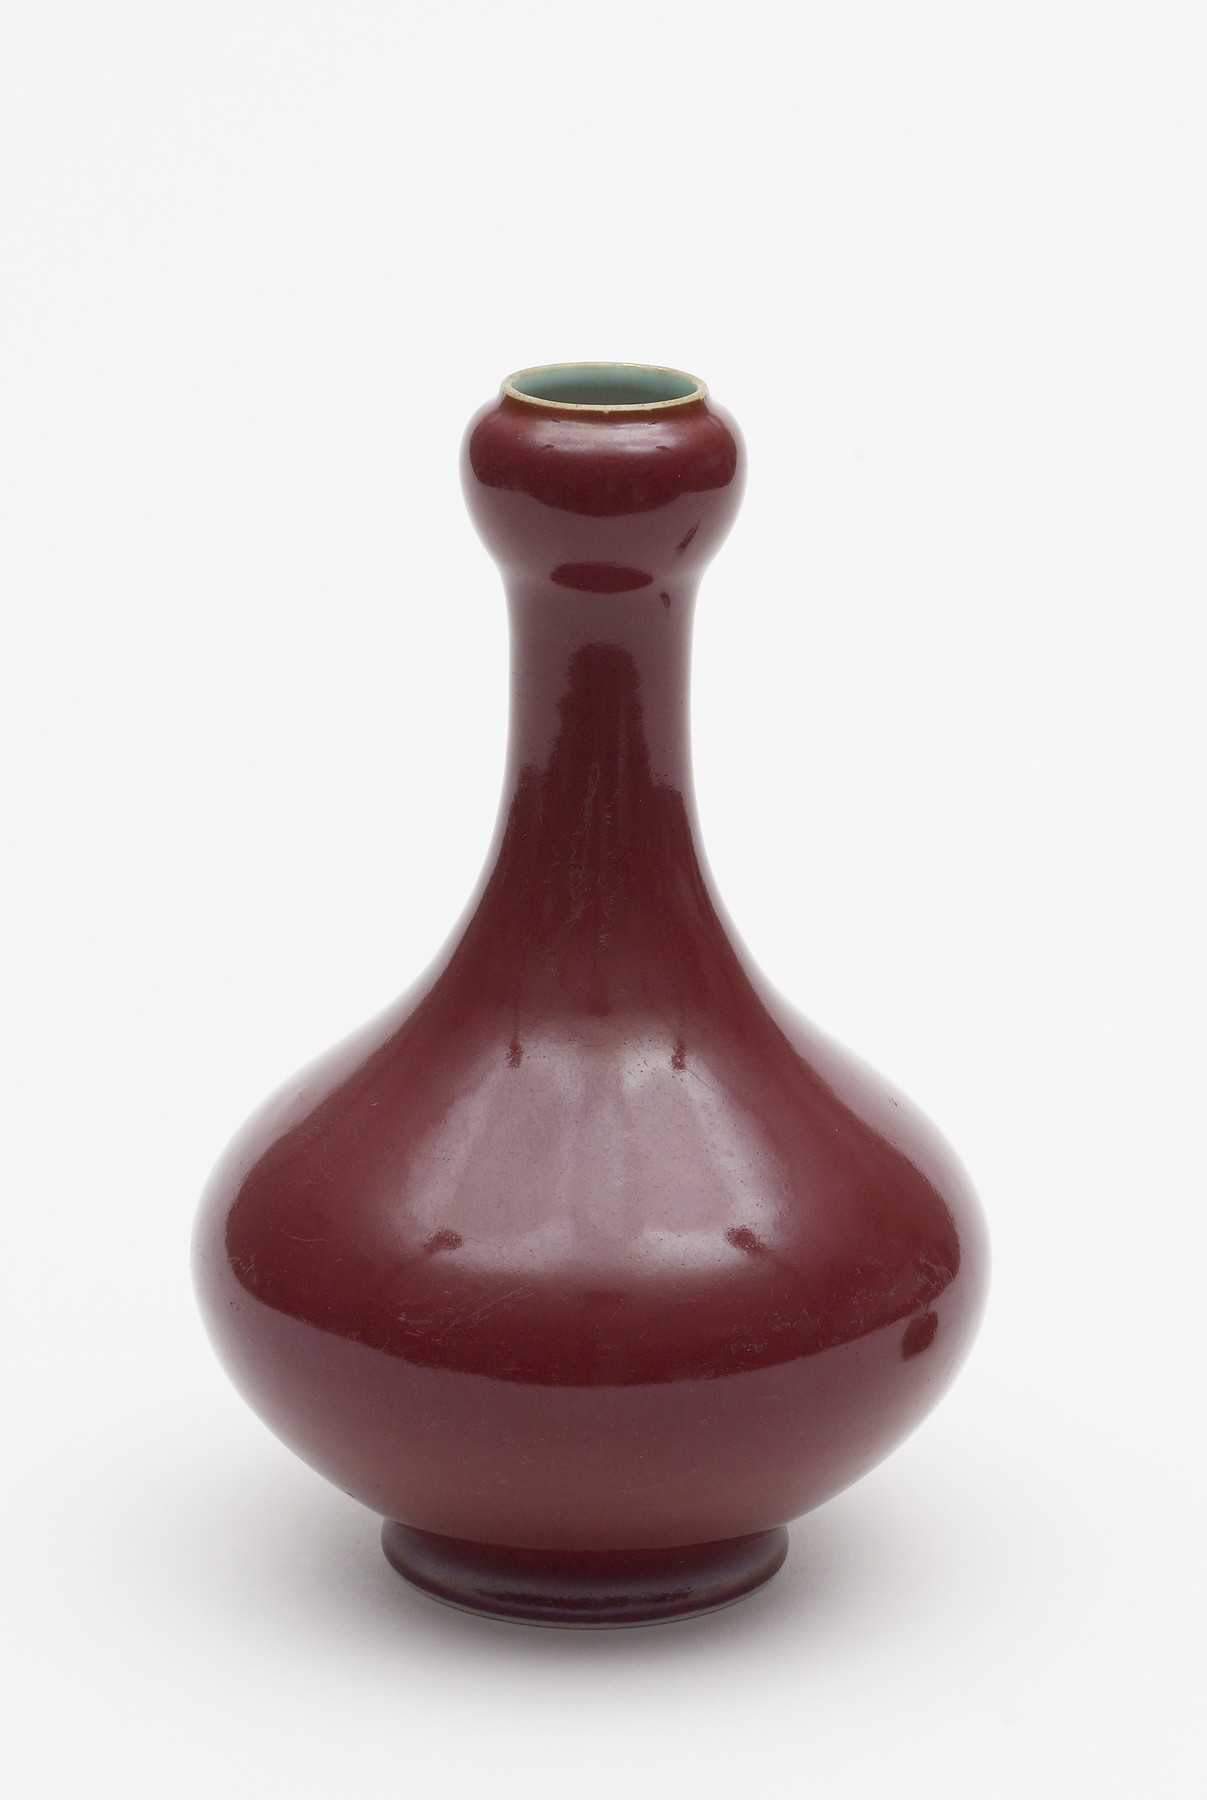 Image for "Garlic-Head" Vase